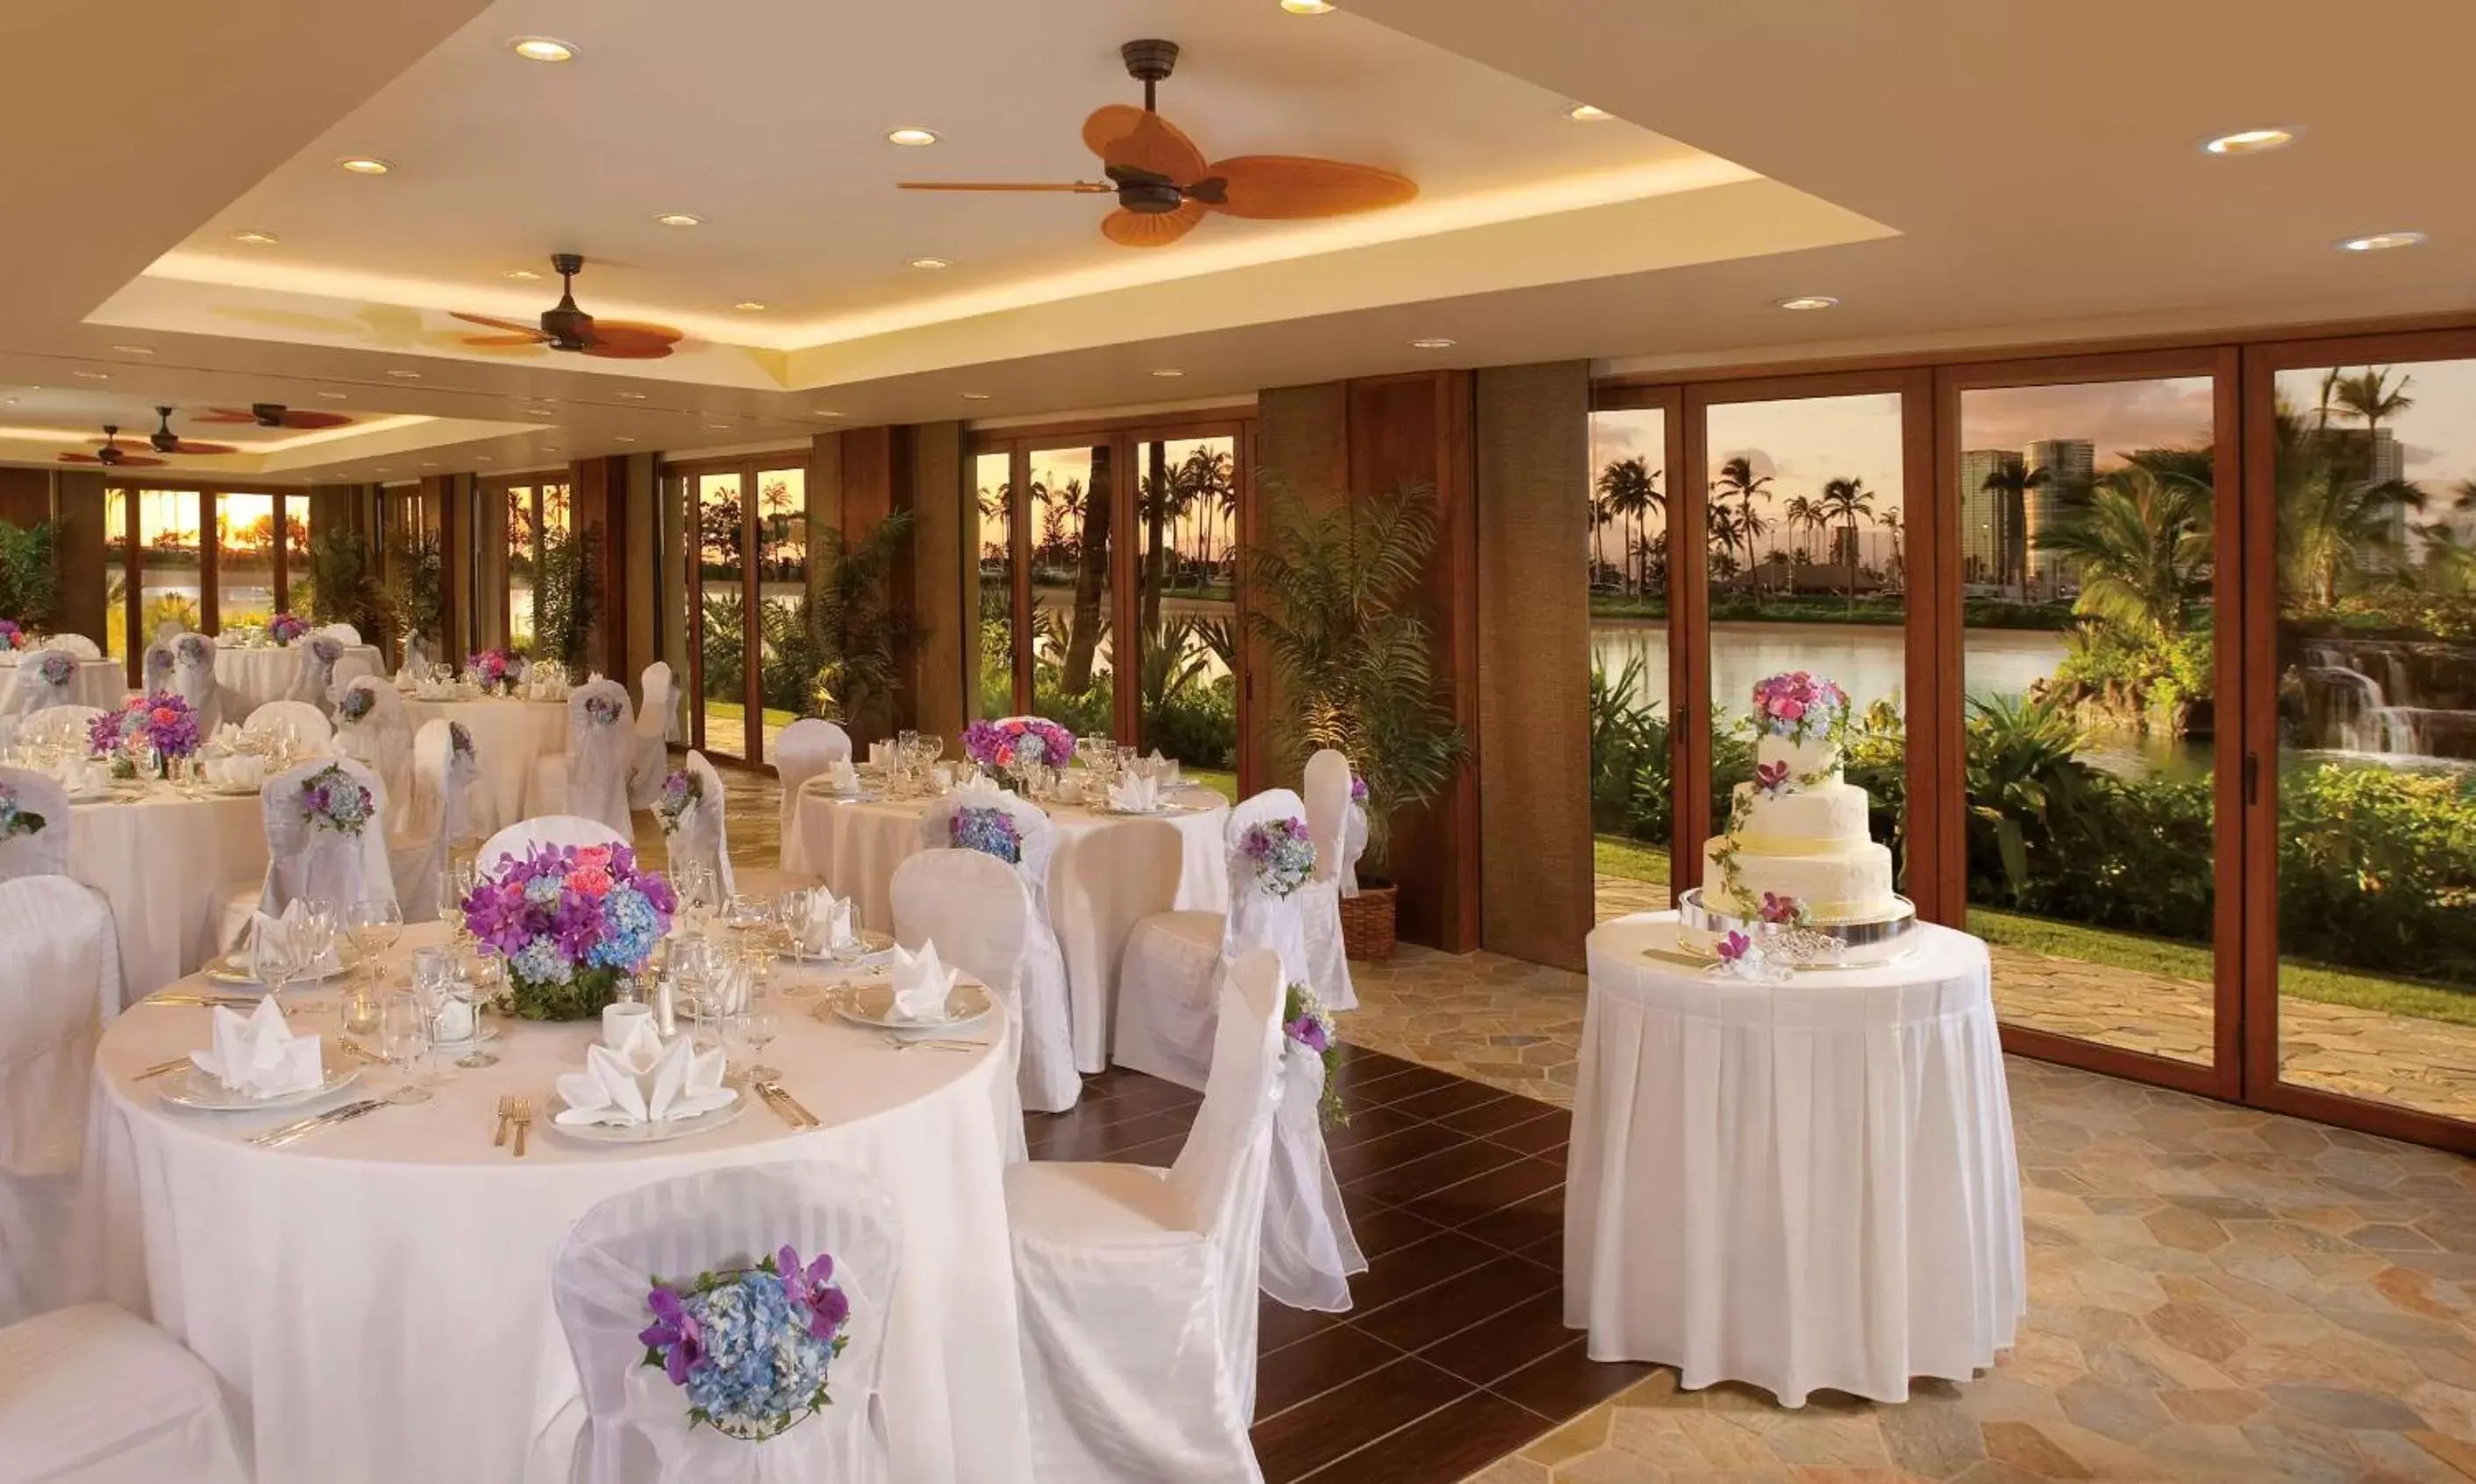 Meeting/conference room, Banquet Facilities in Hilton Hawaiian Village Waikiki Beach Resort